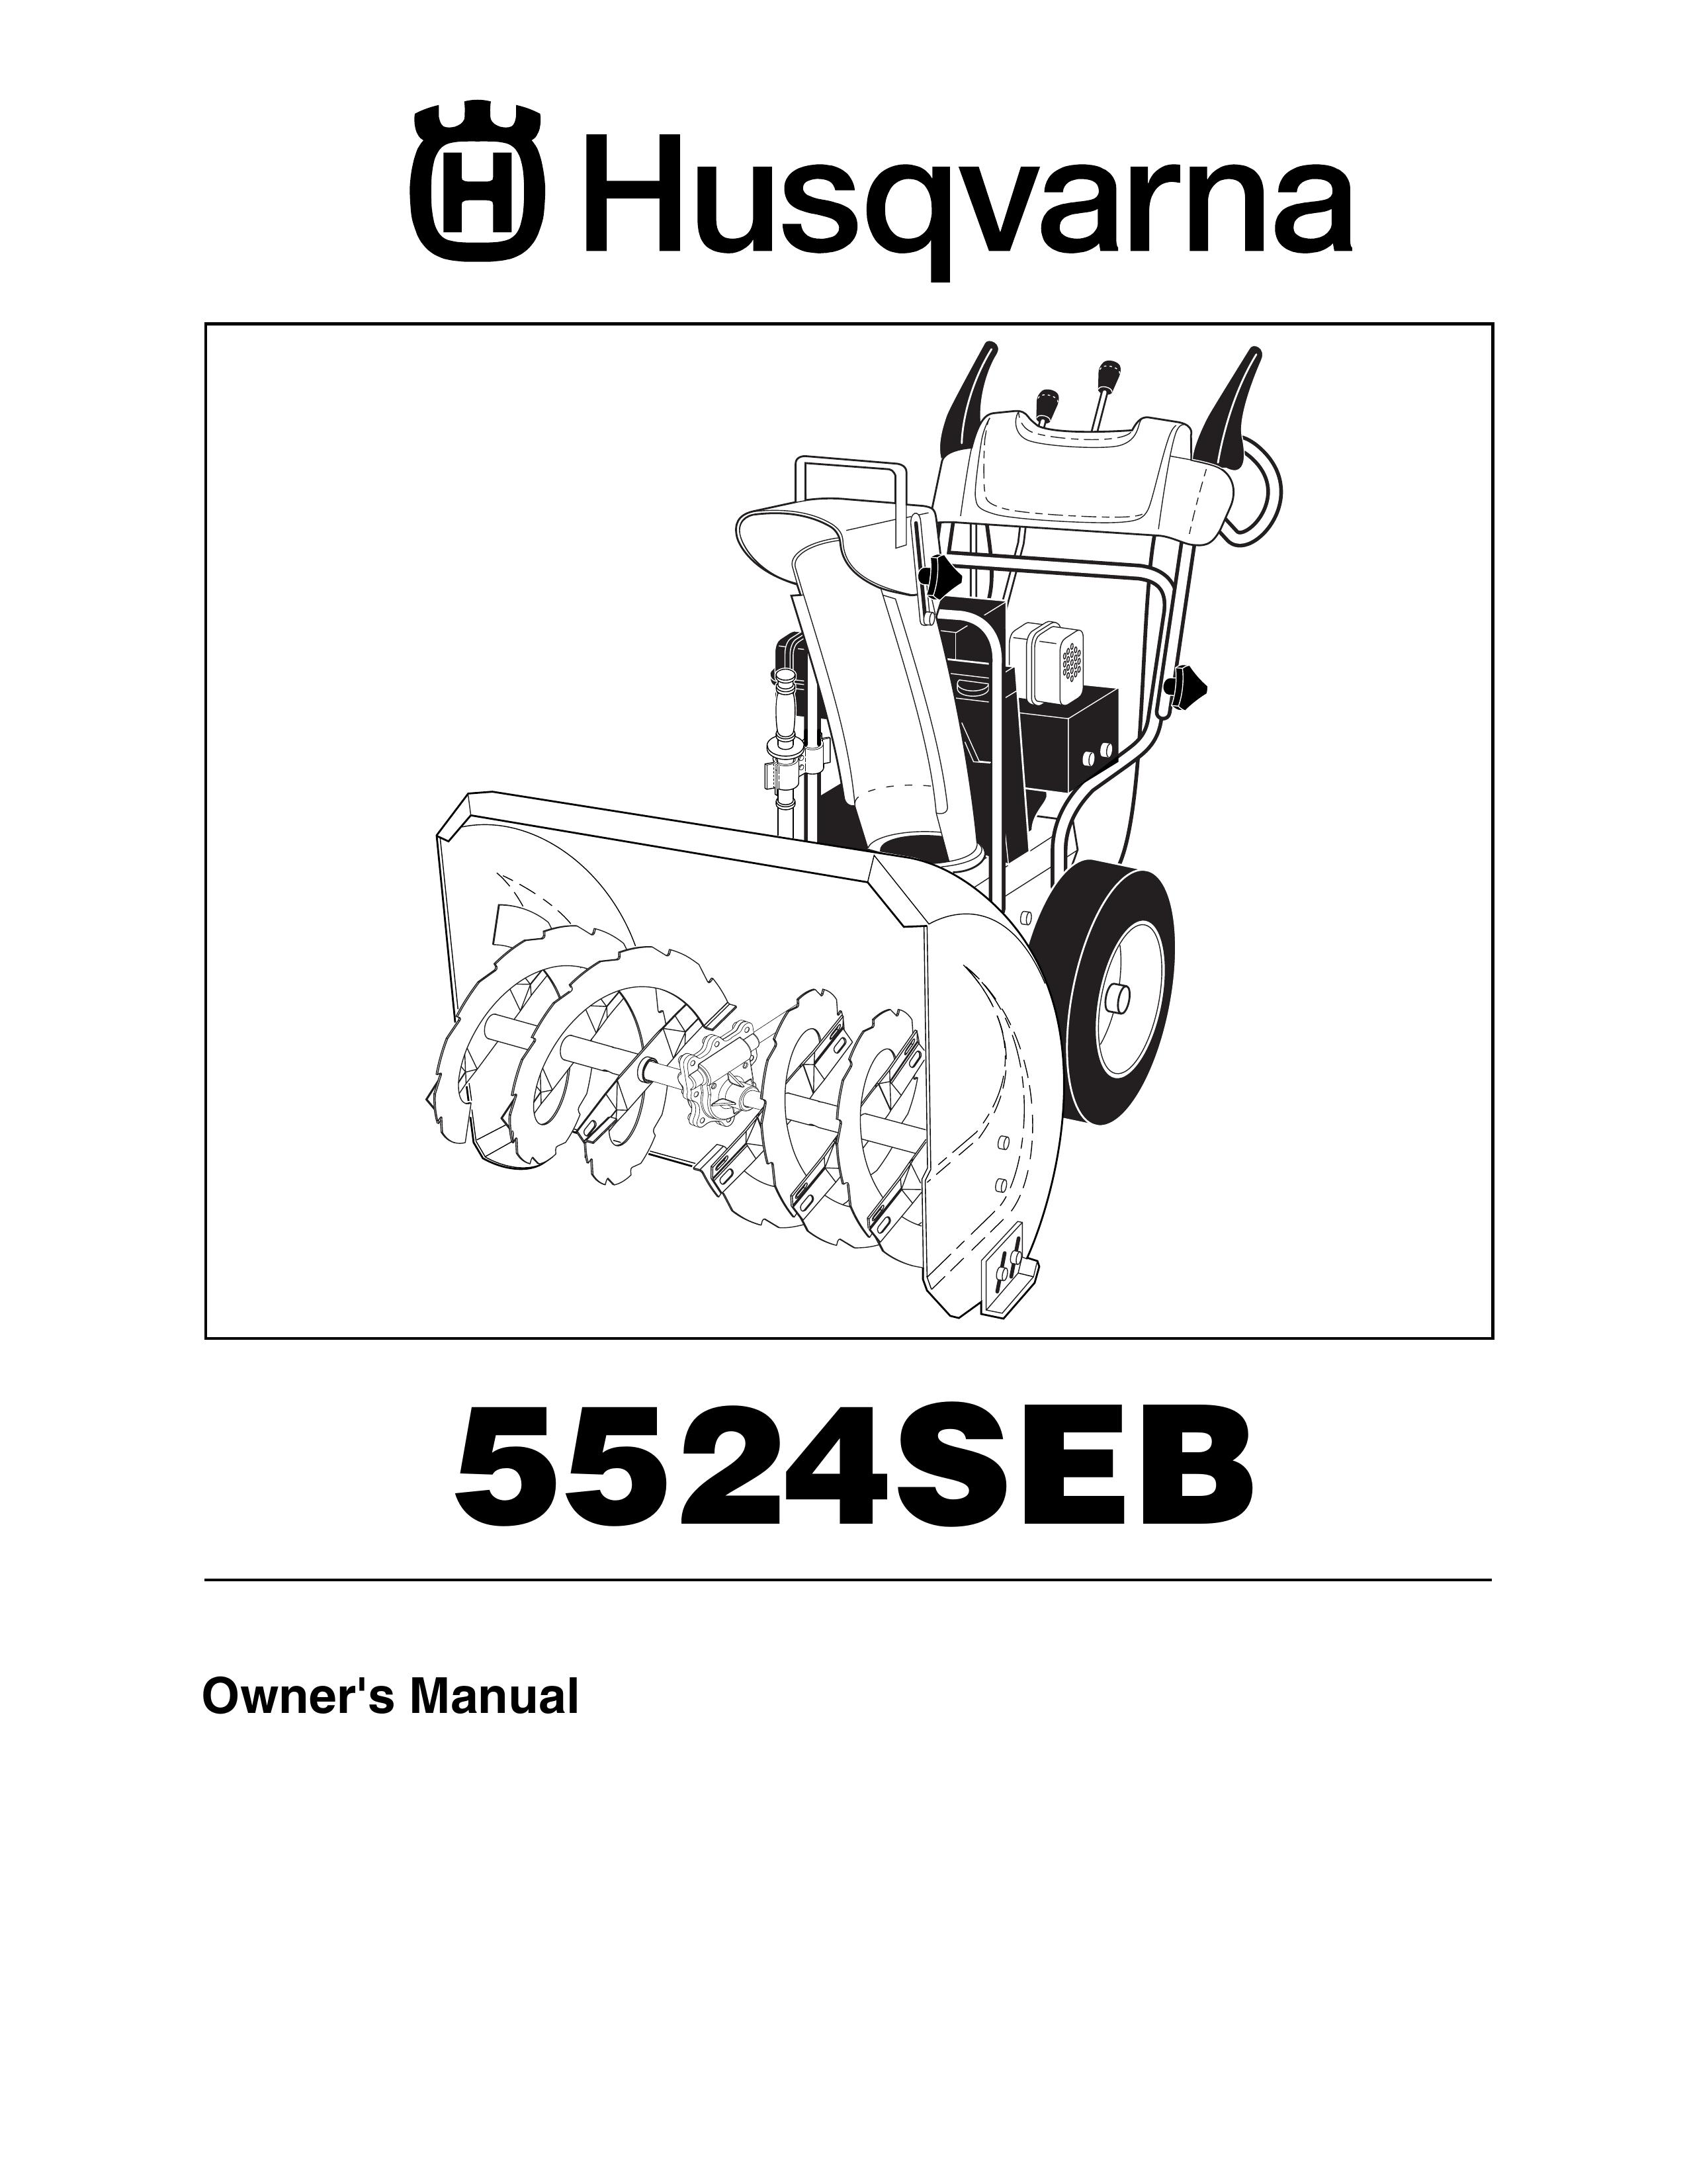 Husqvarna 5524SEB Snow Blower User Manual